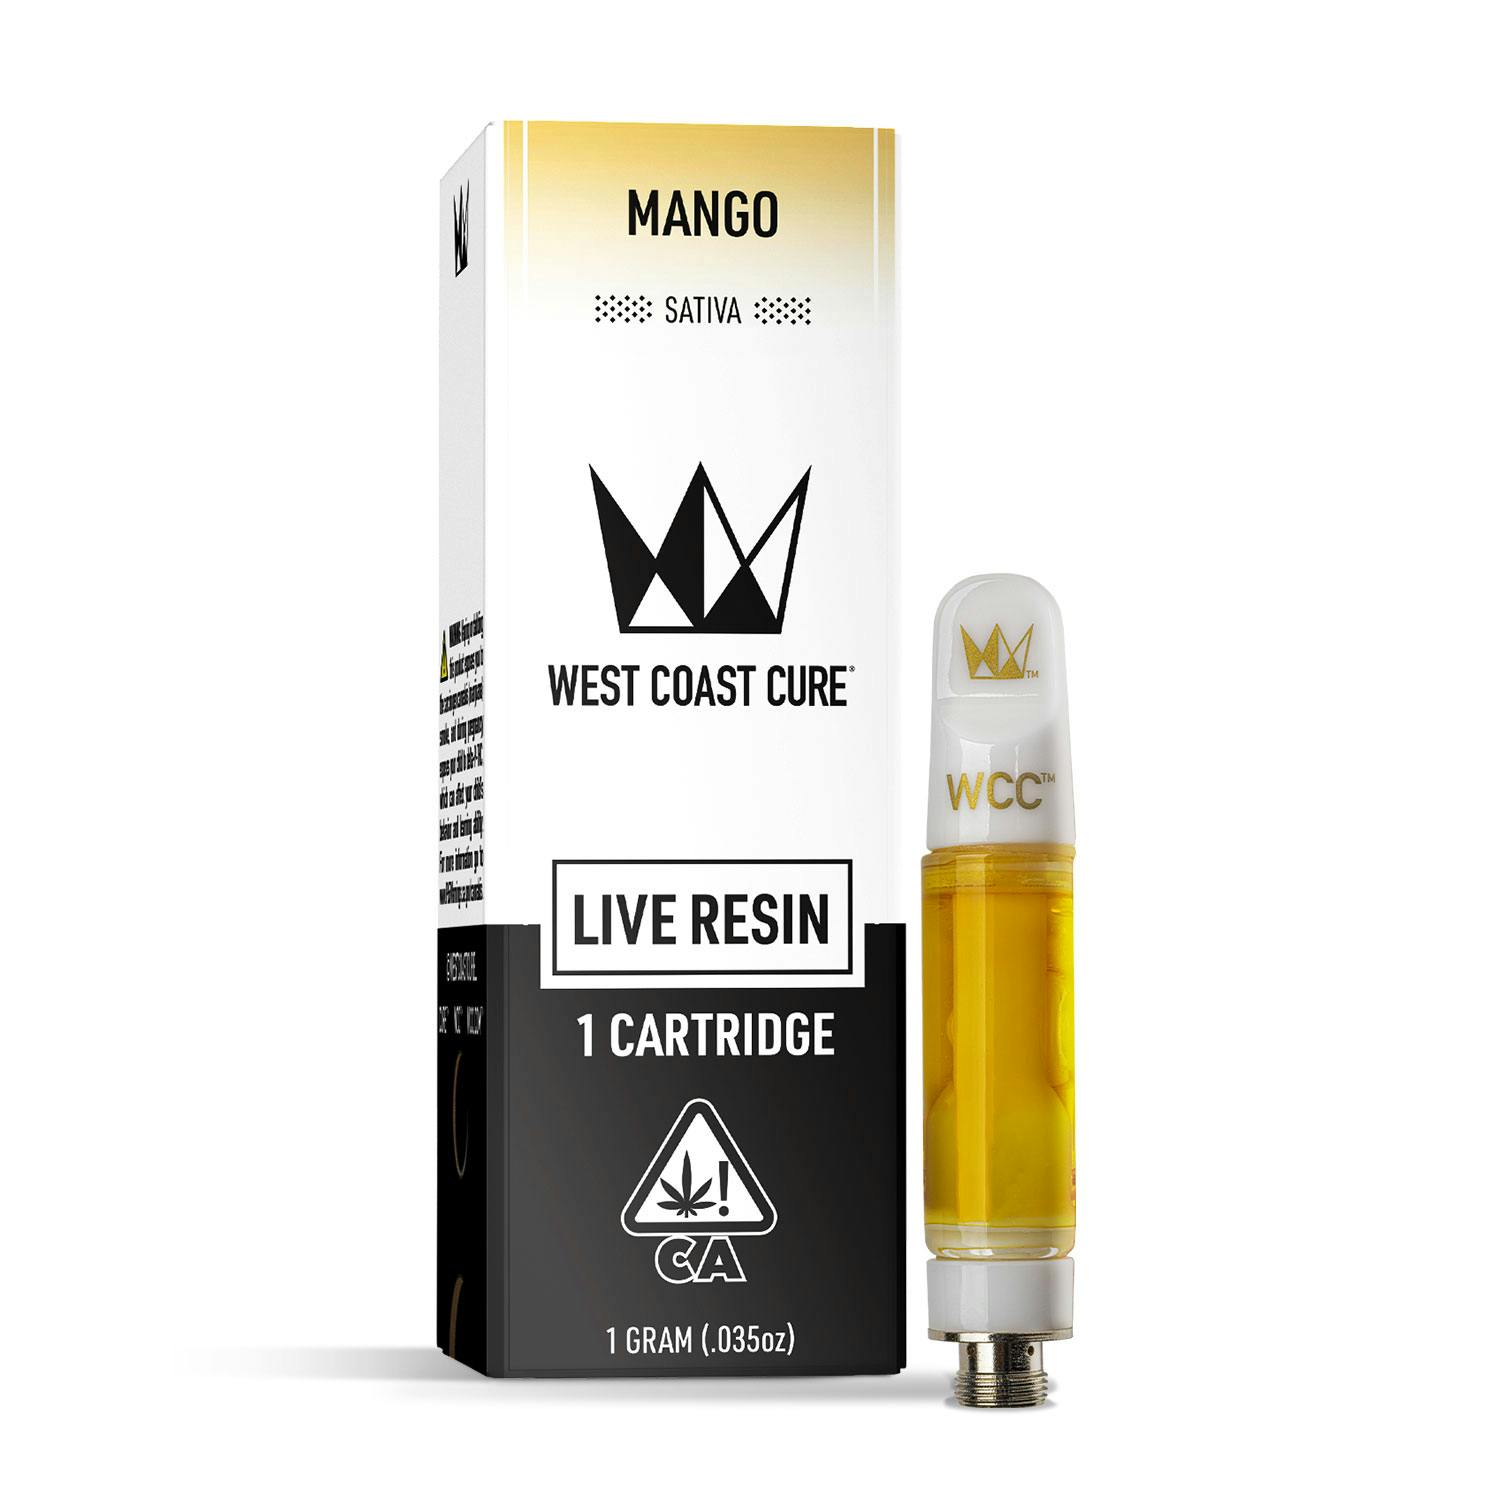 Mango Live Resin Cartridge - 1g